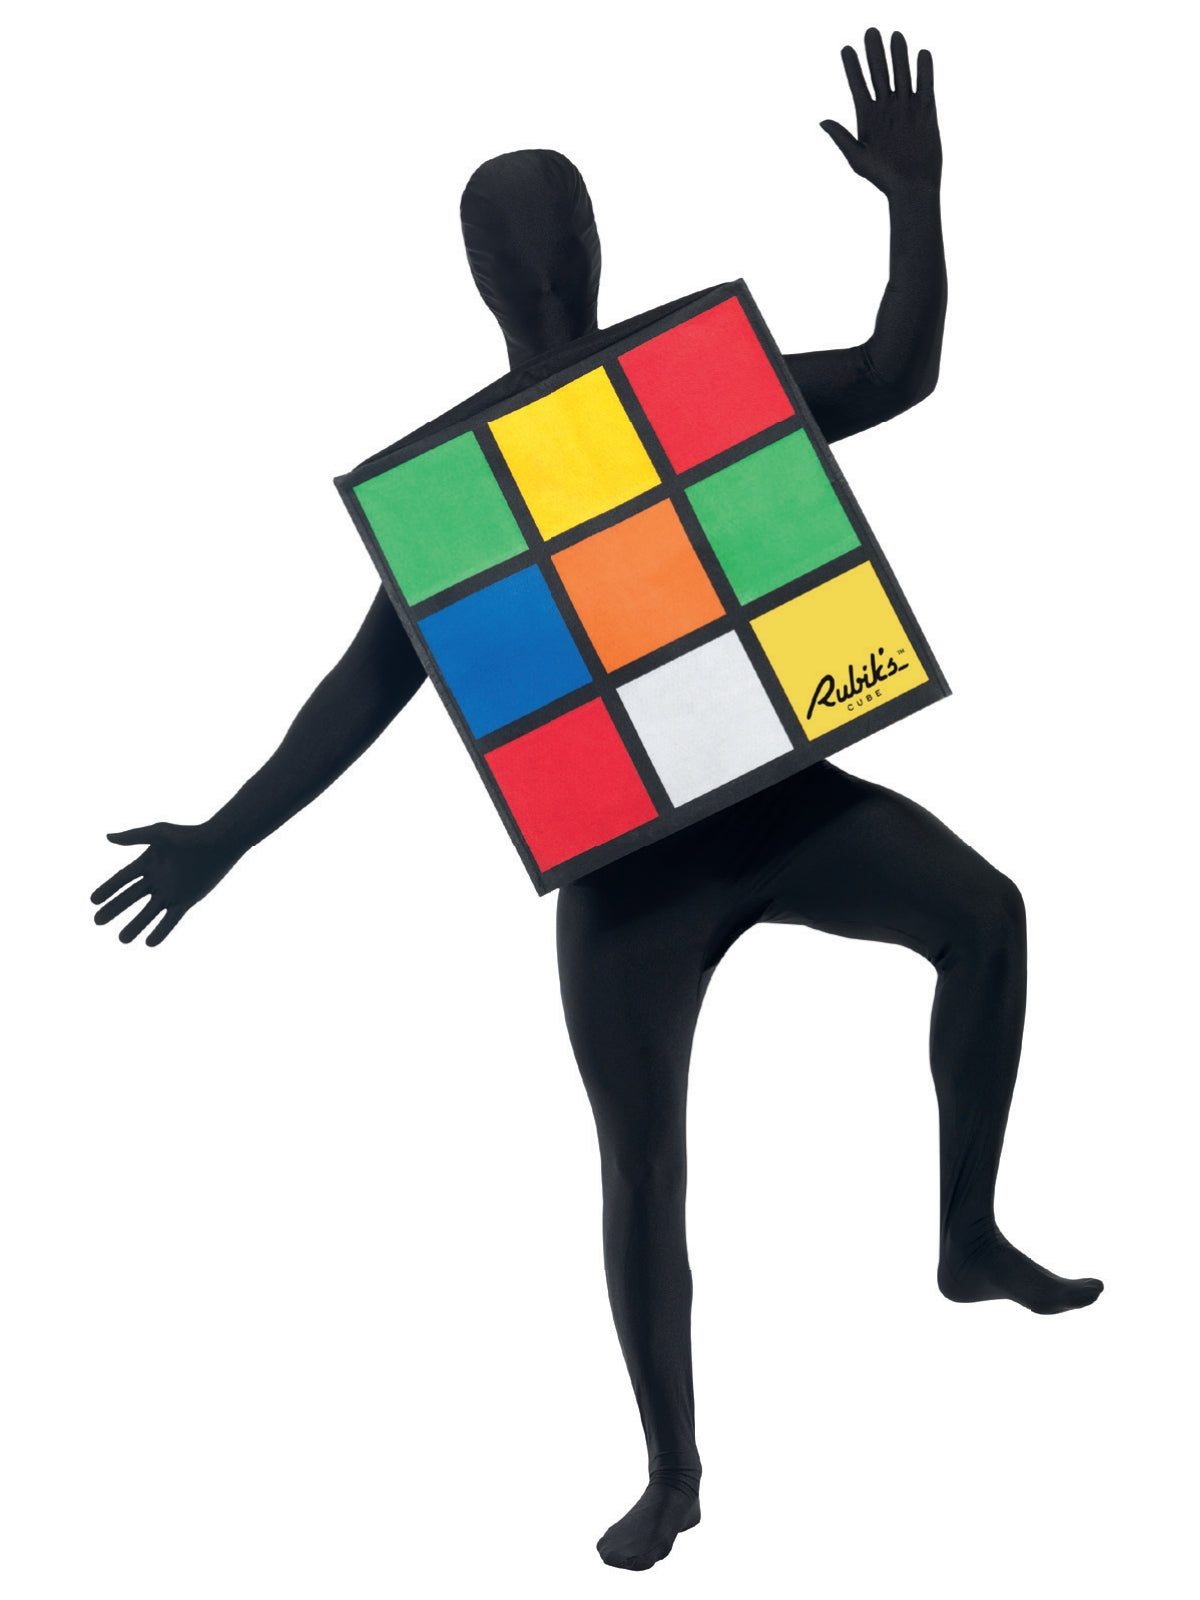 Rubik's Cube Costumes